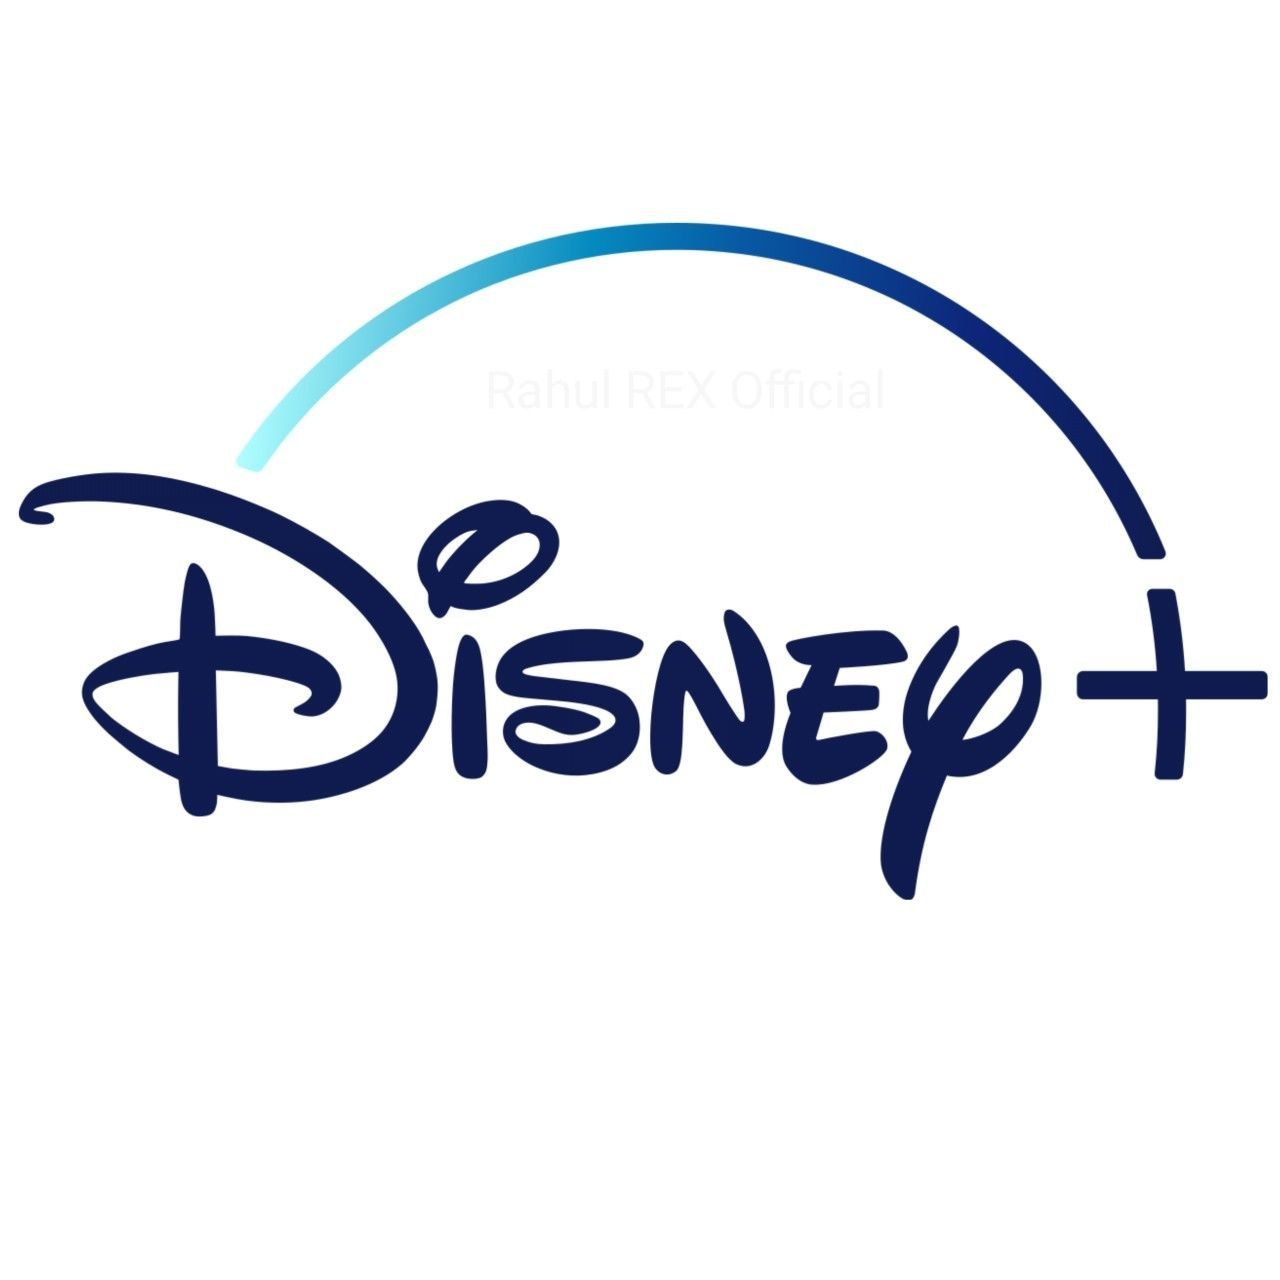 Disney+: nuova serie girata a Genova